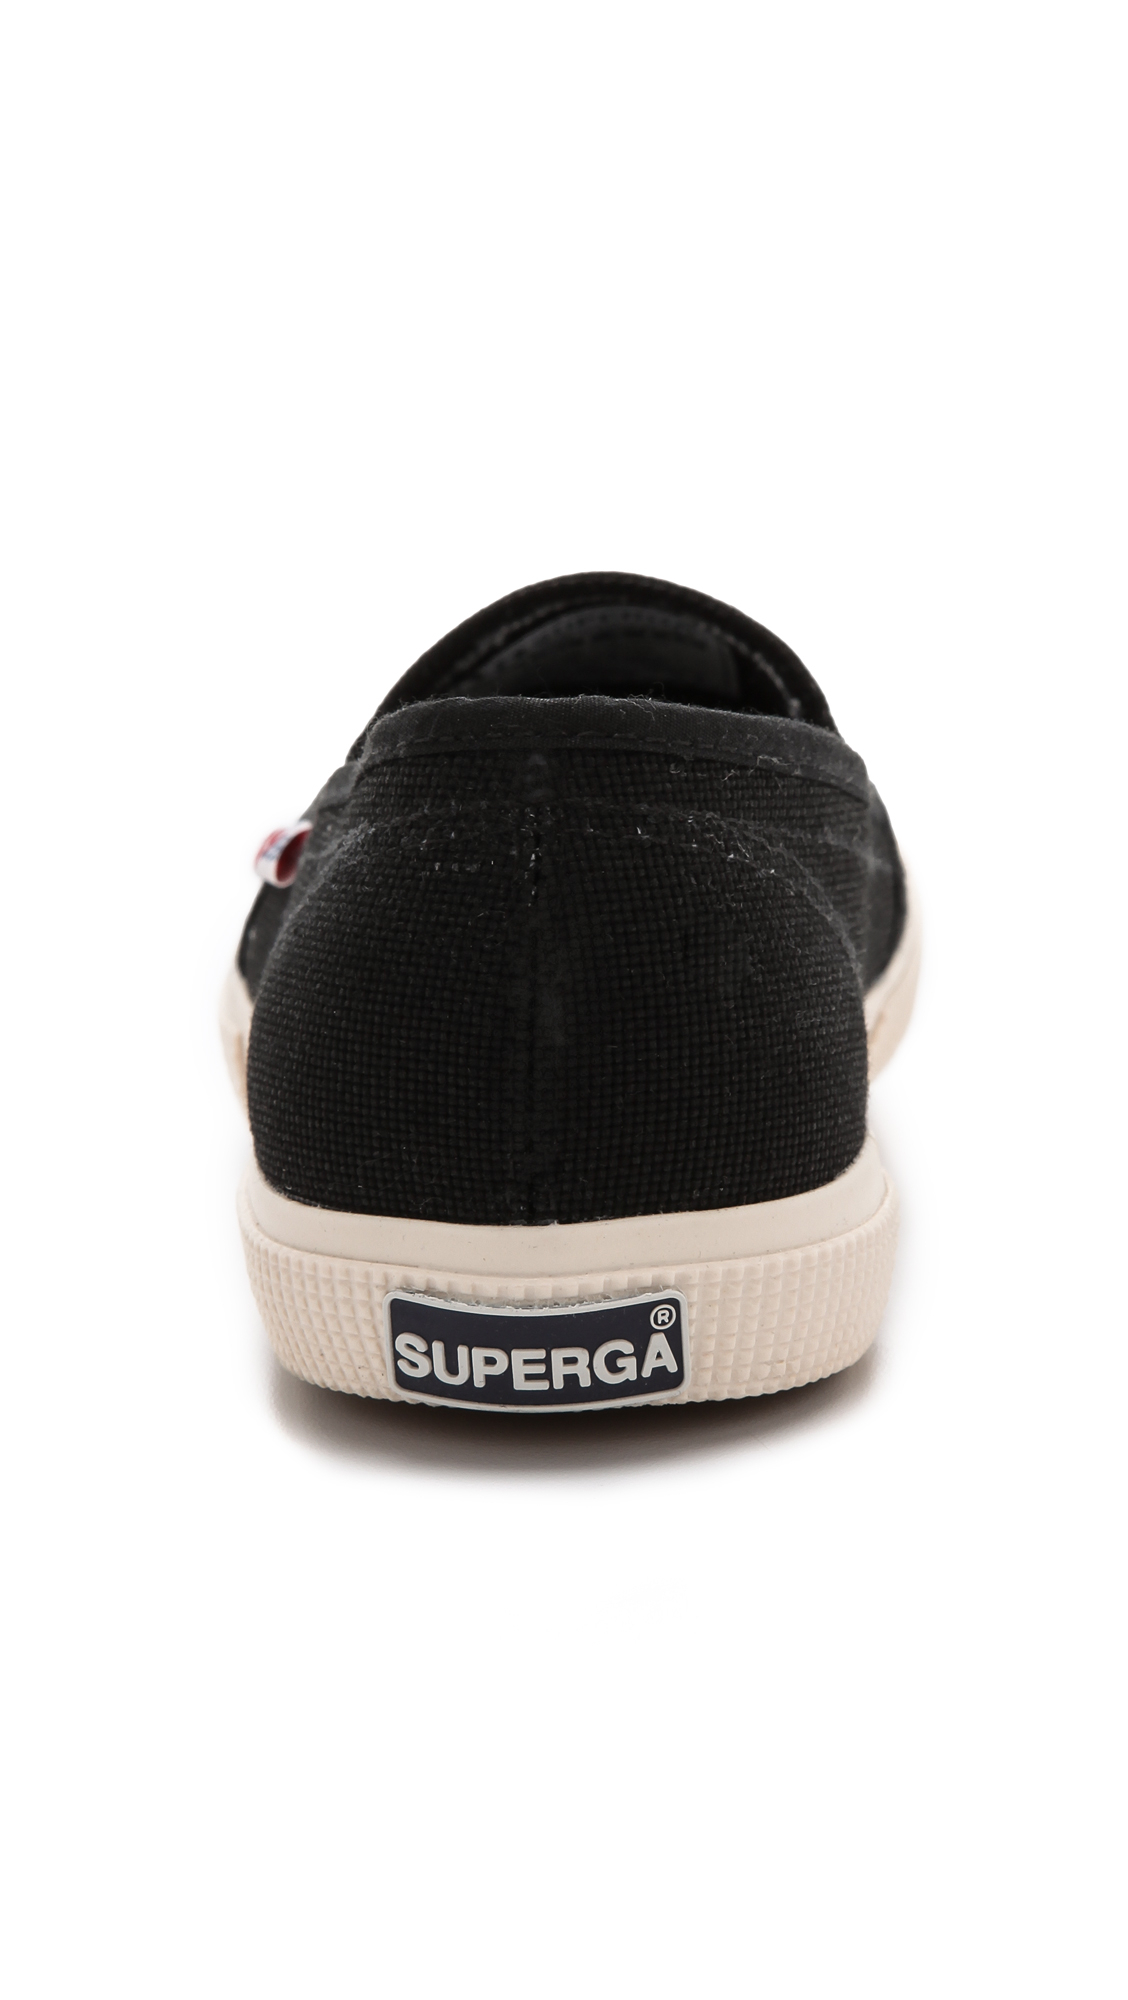 Superga Slip On Sneakers - Black | Lyst